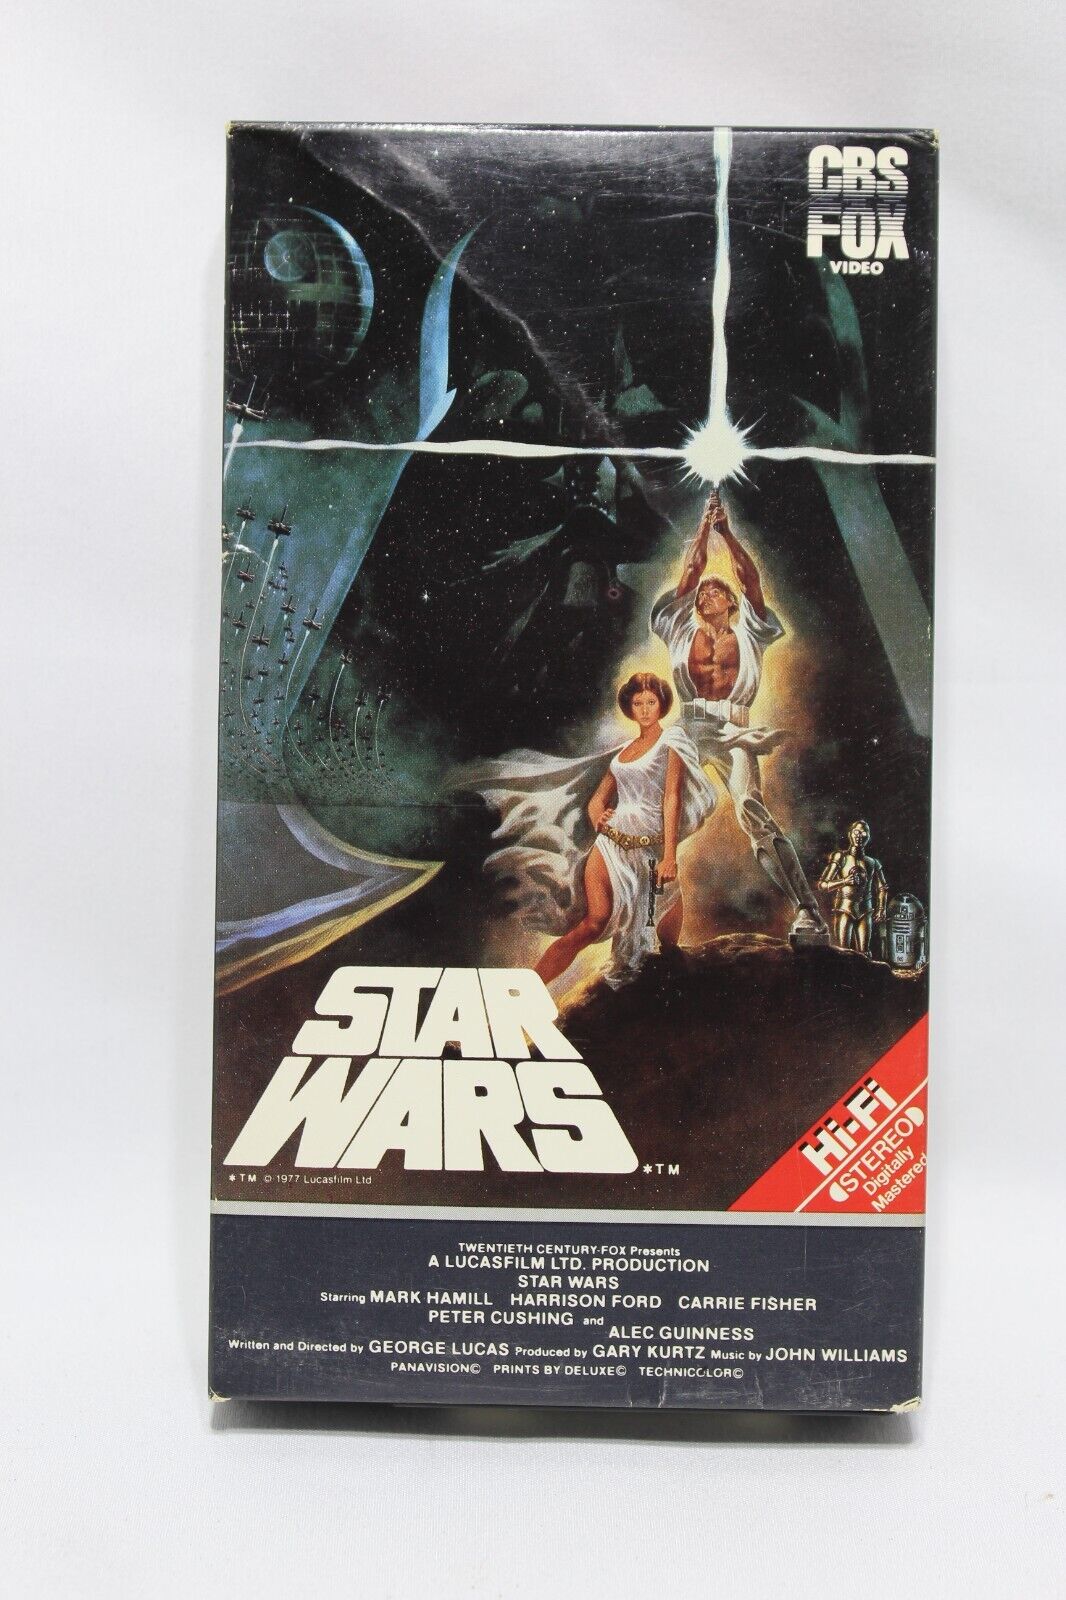 VHS STAR WARS 1987 CBS/FOX Original Release red label. Rare, Collect